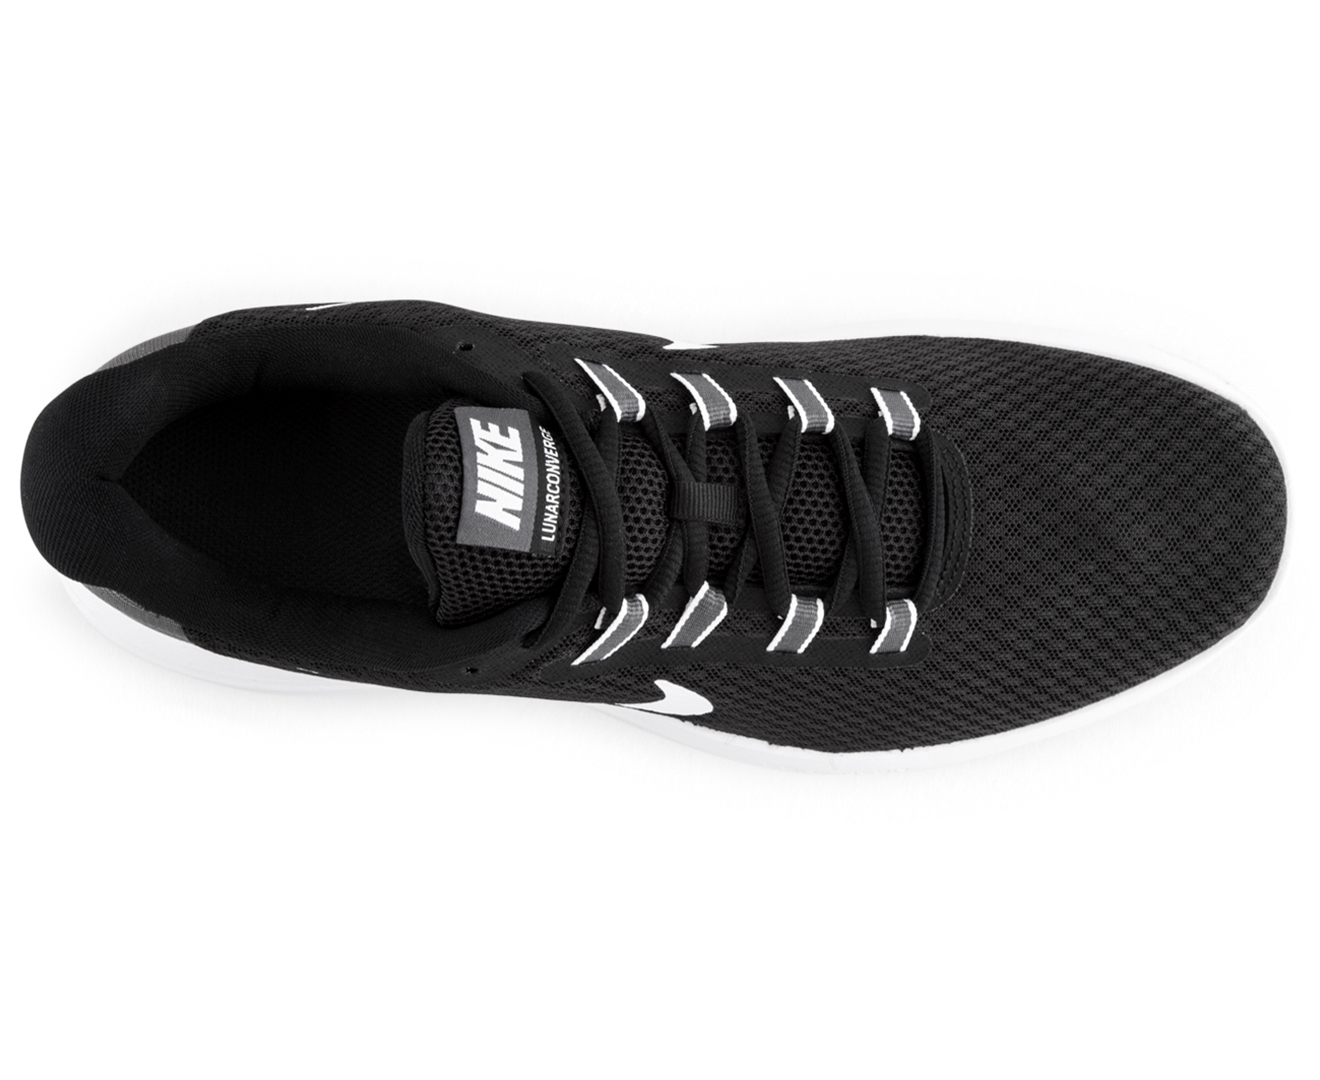 Nike Men's Lunarconverge Shoe - Black/Grey | Catch.co.nz